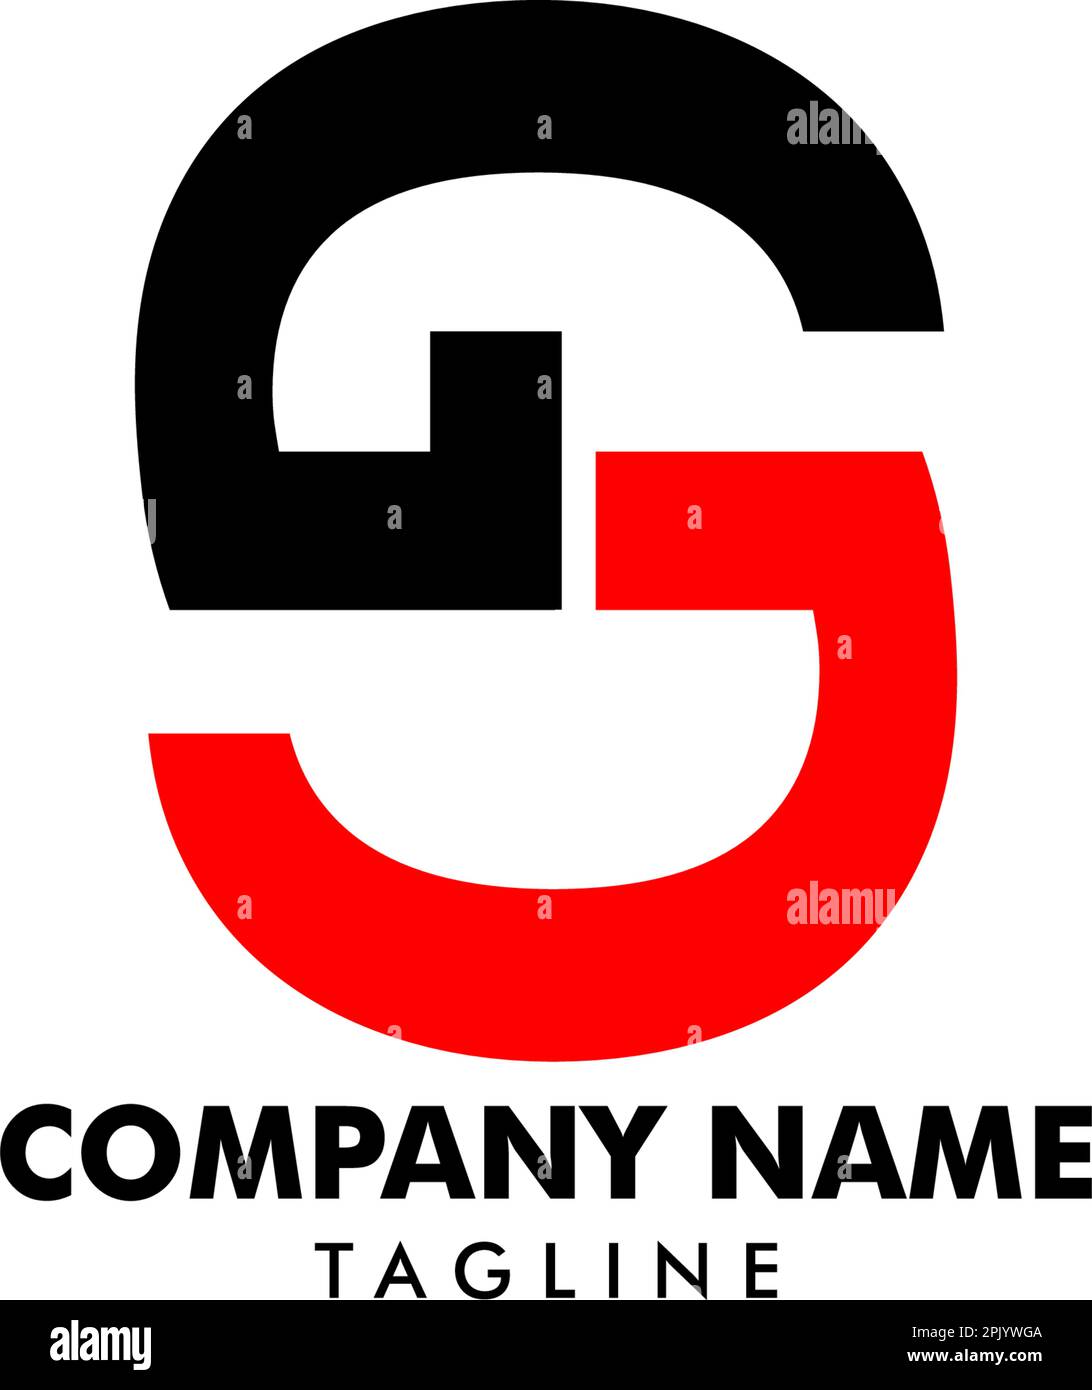 GS Initial handwriting logo design - stock vector 2651418 | Crushpixel